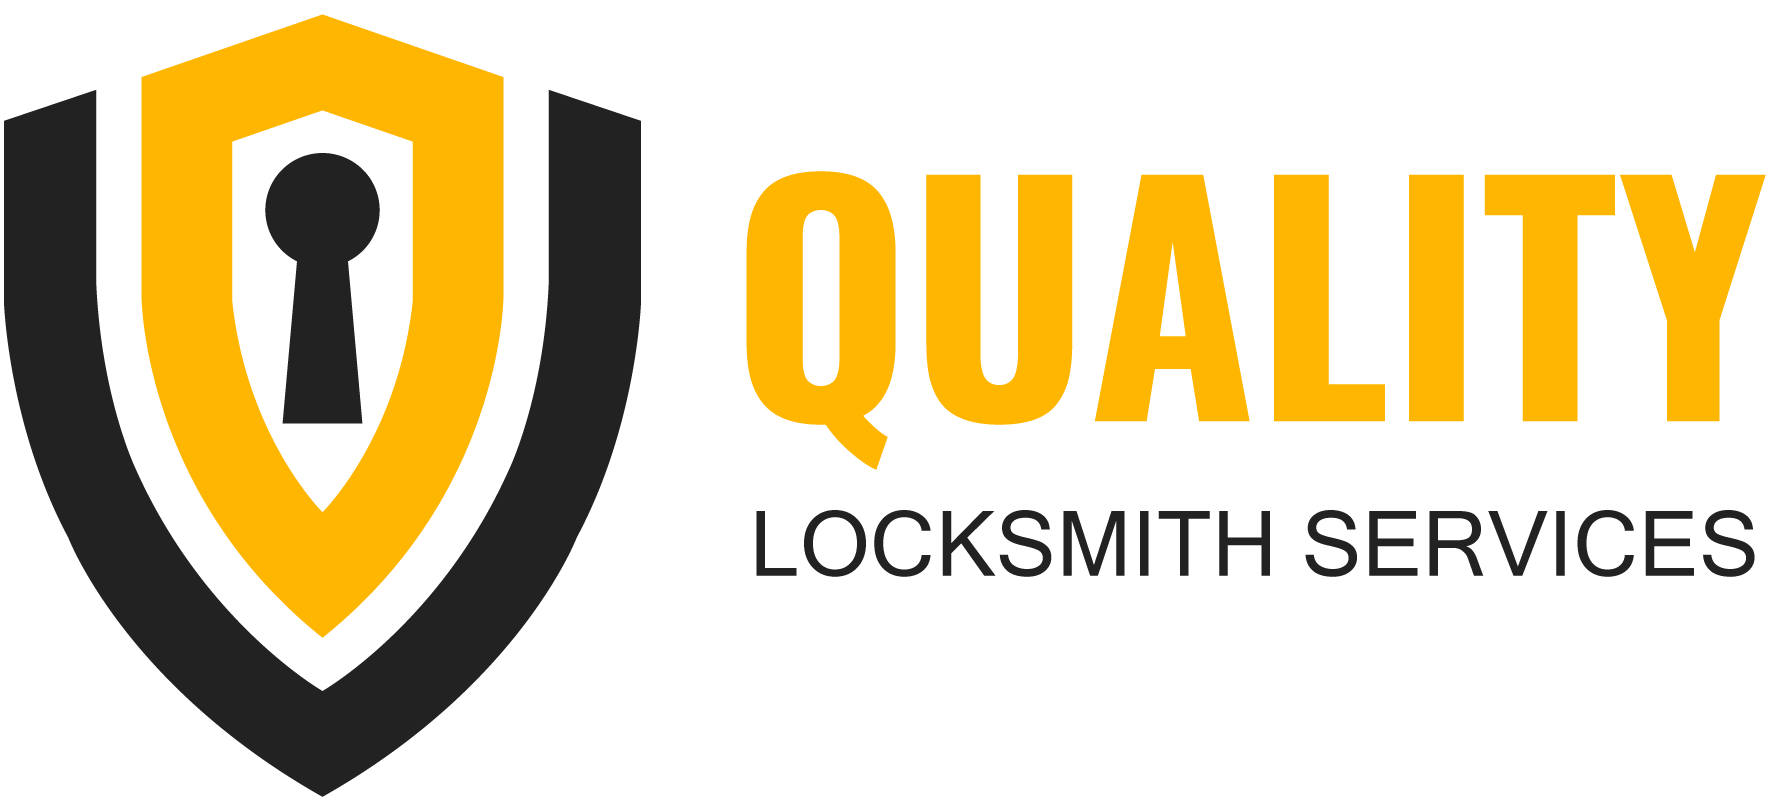 Quality Locksmith Services - (714)930-1105